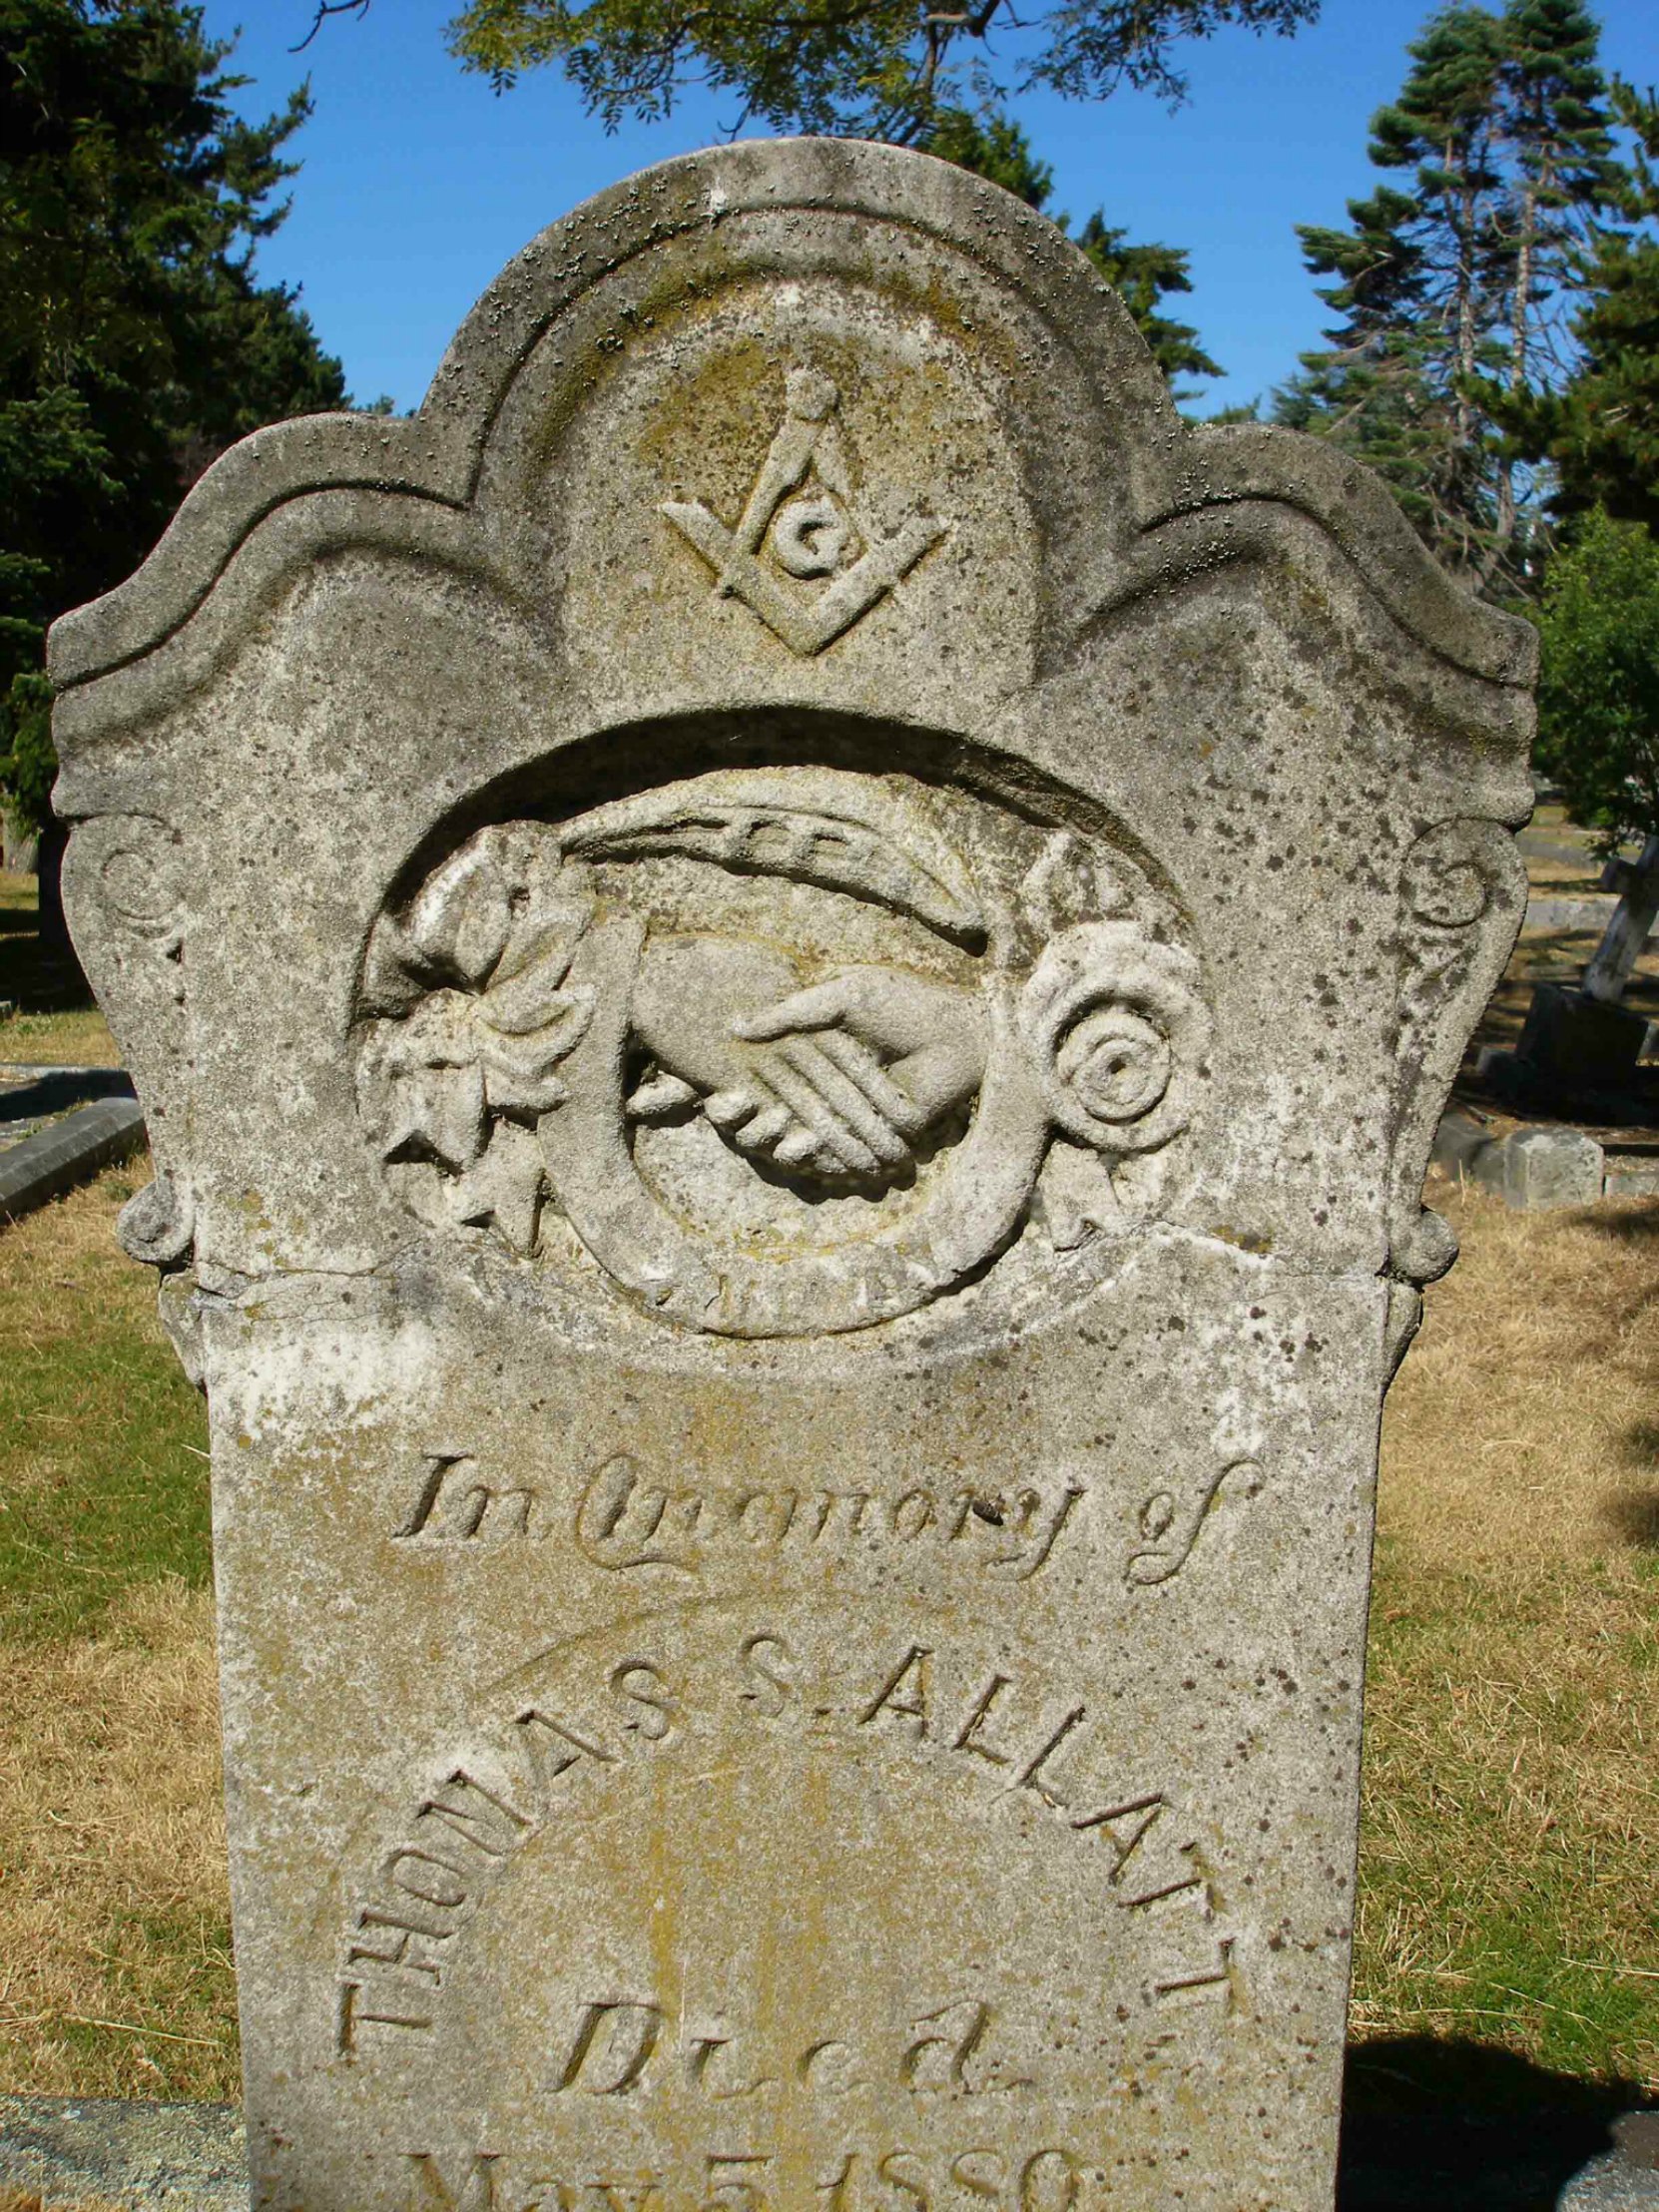 Thomas Smith Allatt grave stone detailing, Ross Bay Cemetery, Victoria, B.C.